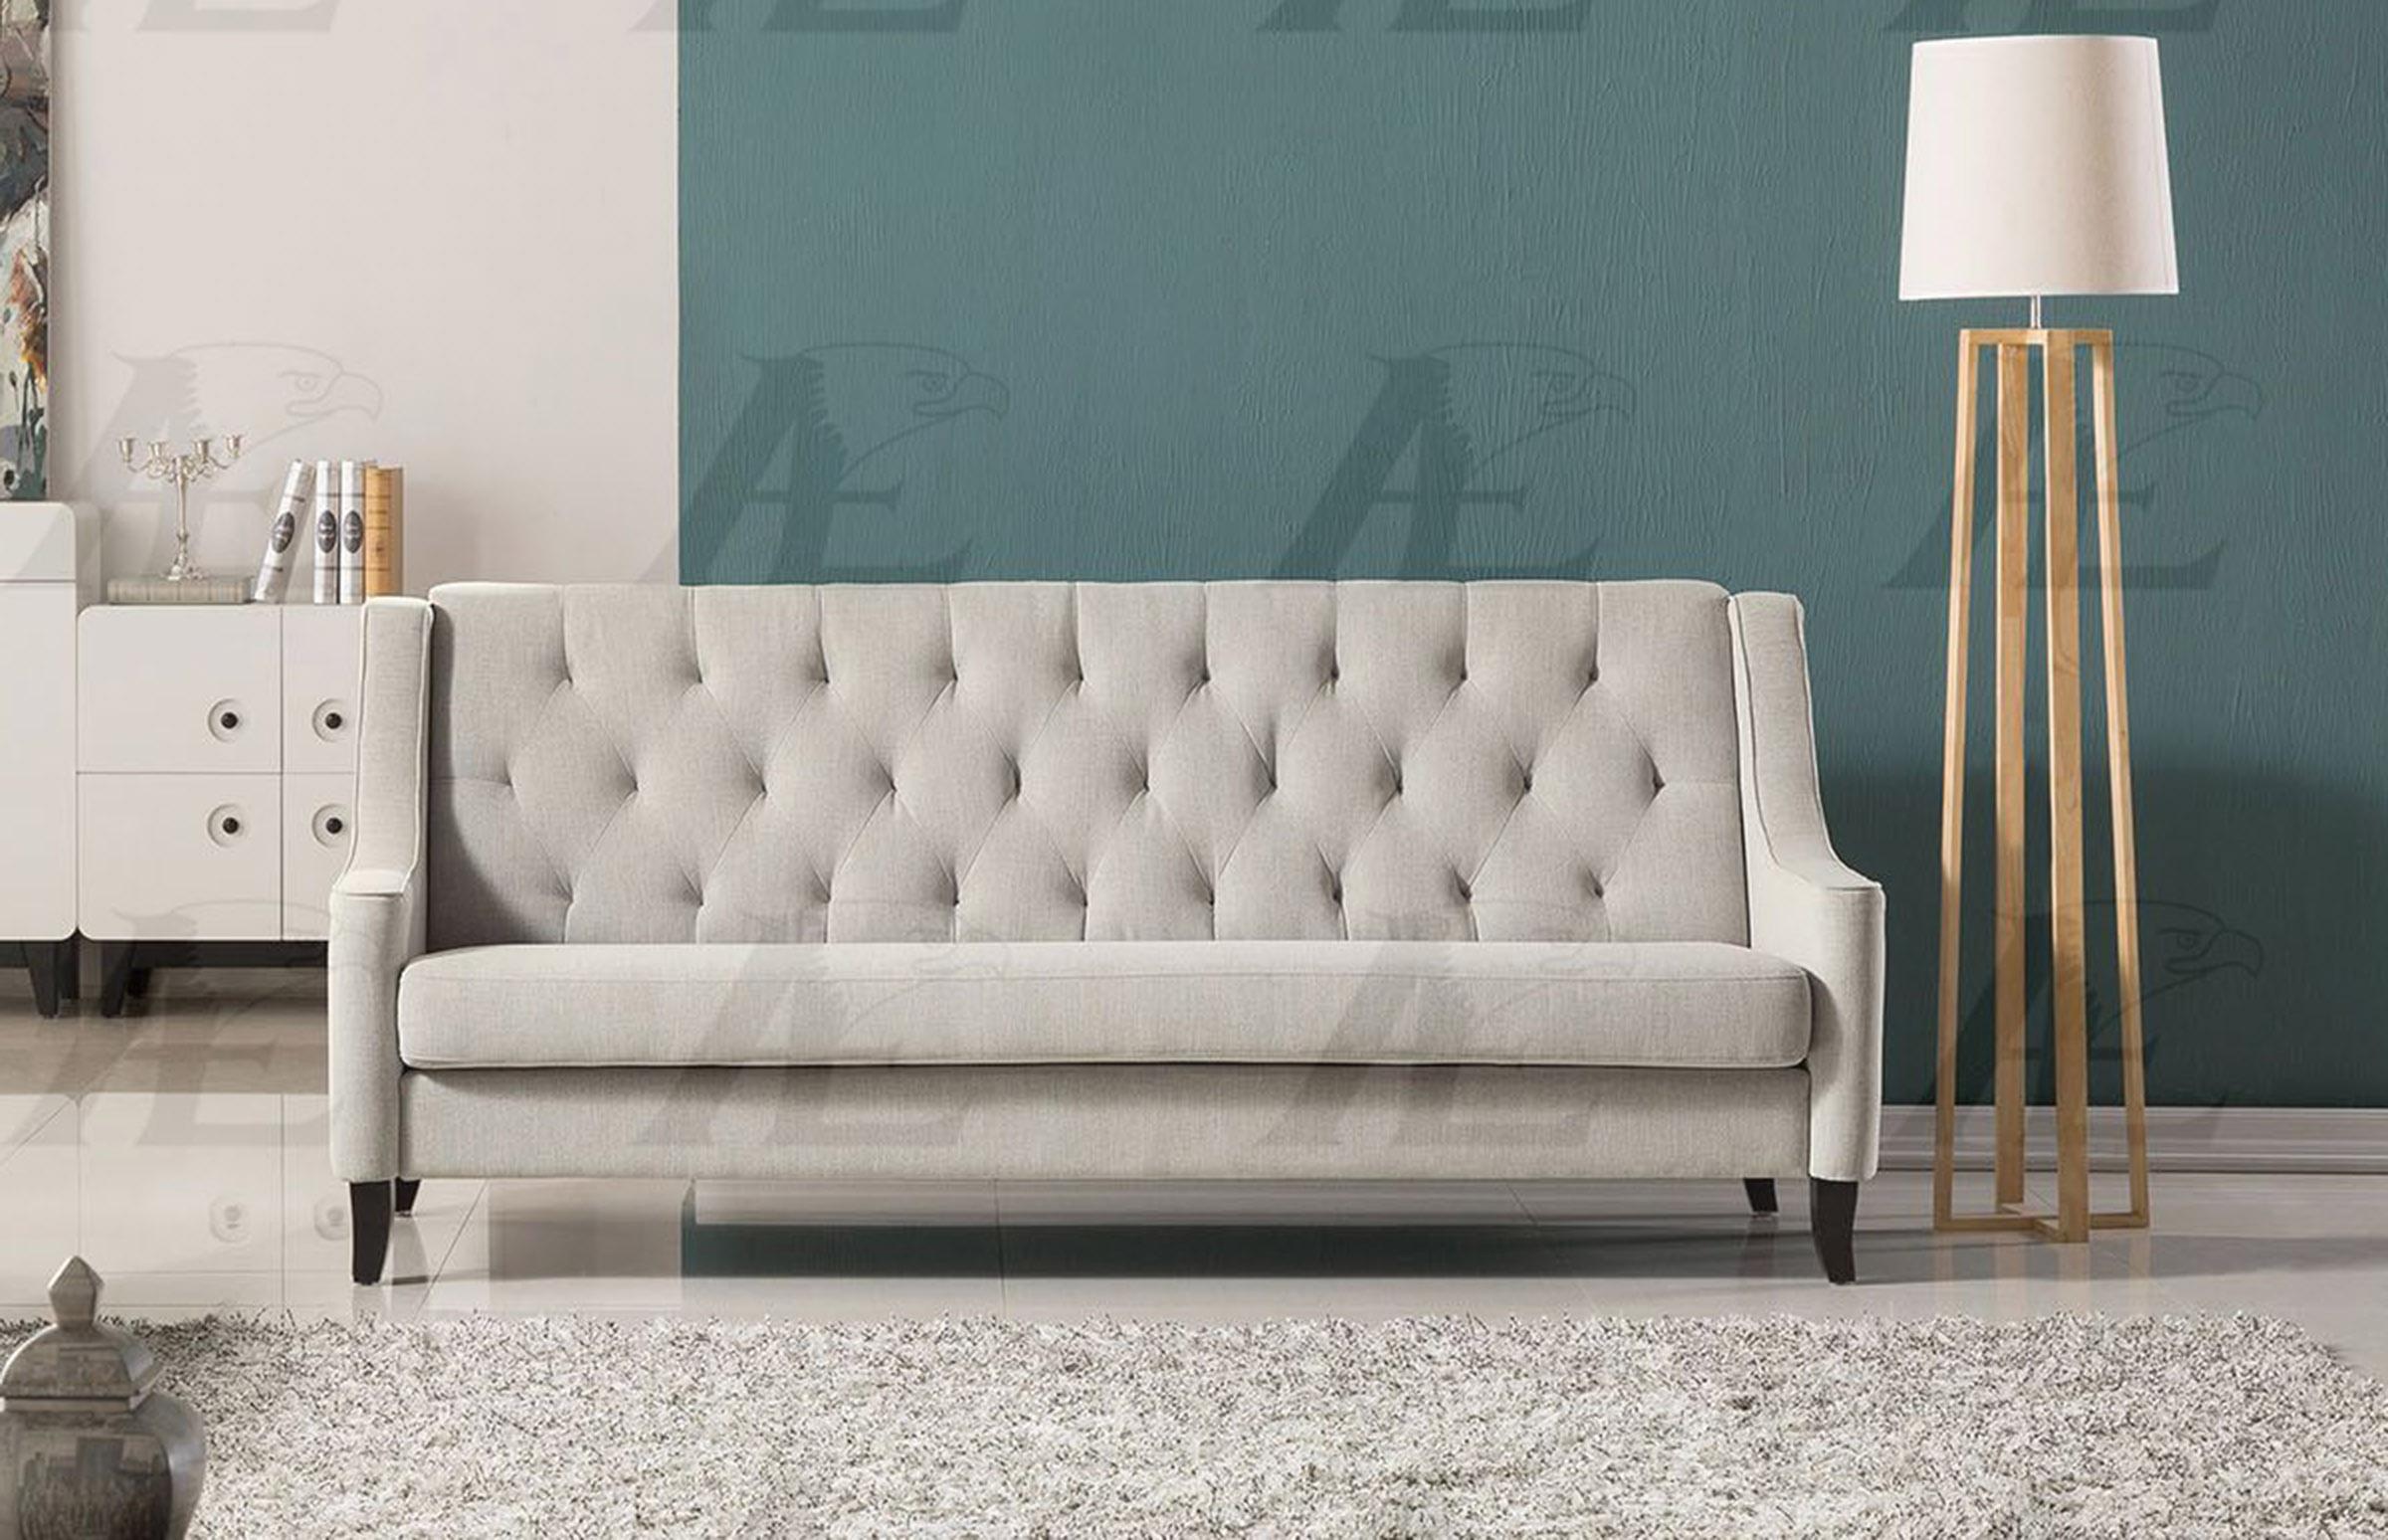 

    
American Eagle Furniture AE2372-LG Light Gray Fabric Tufted Sofa Contemporary Style
